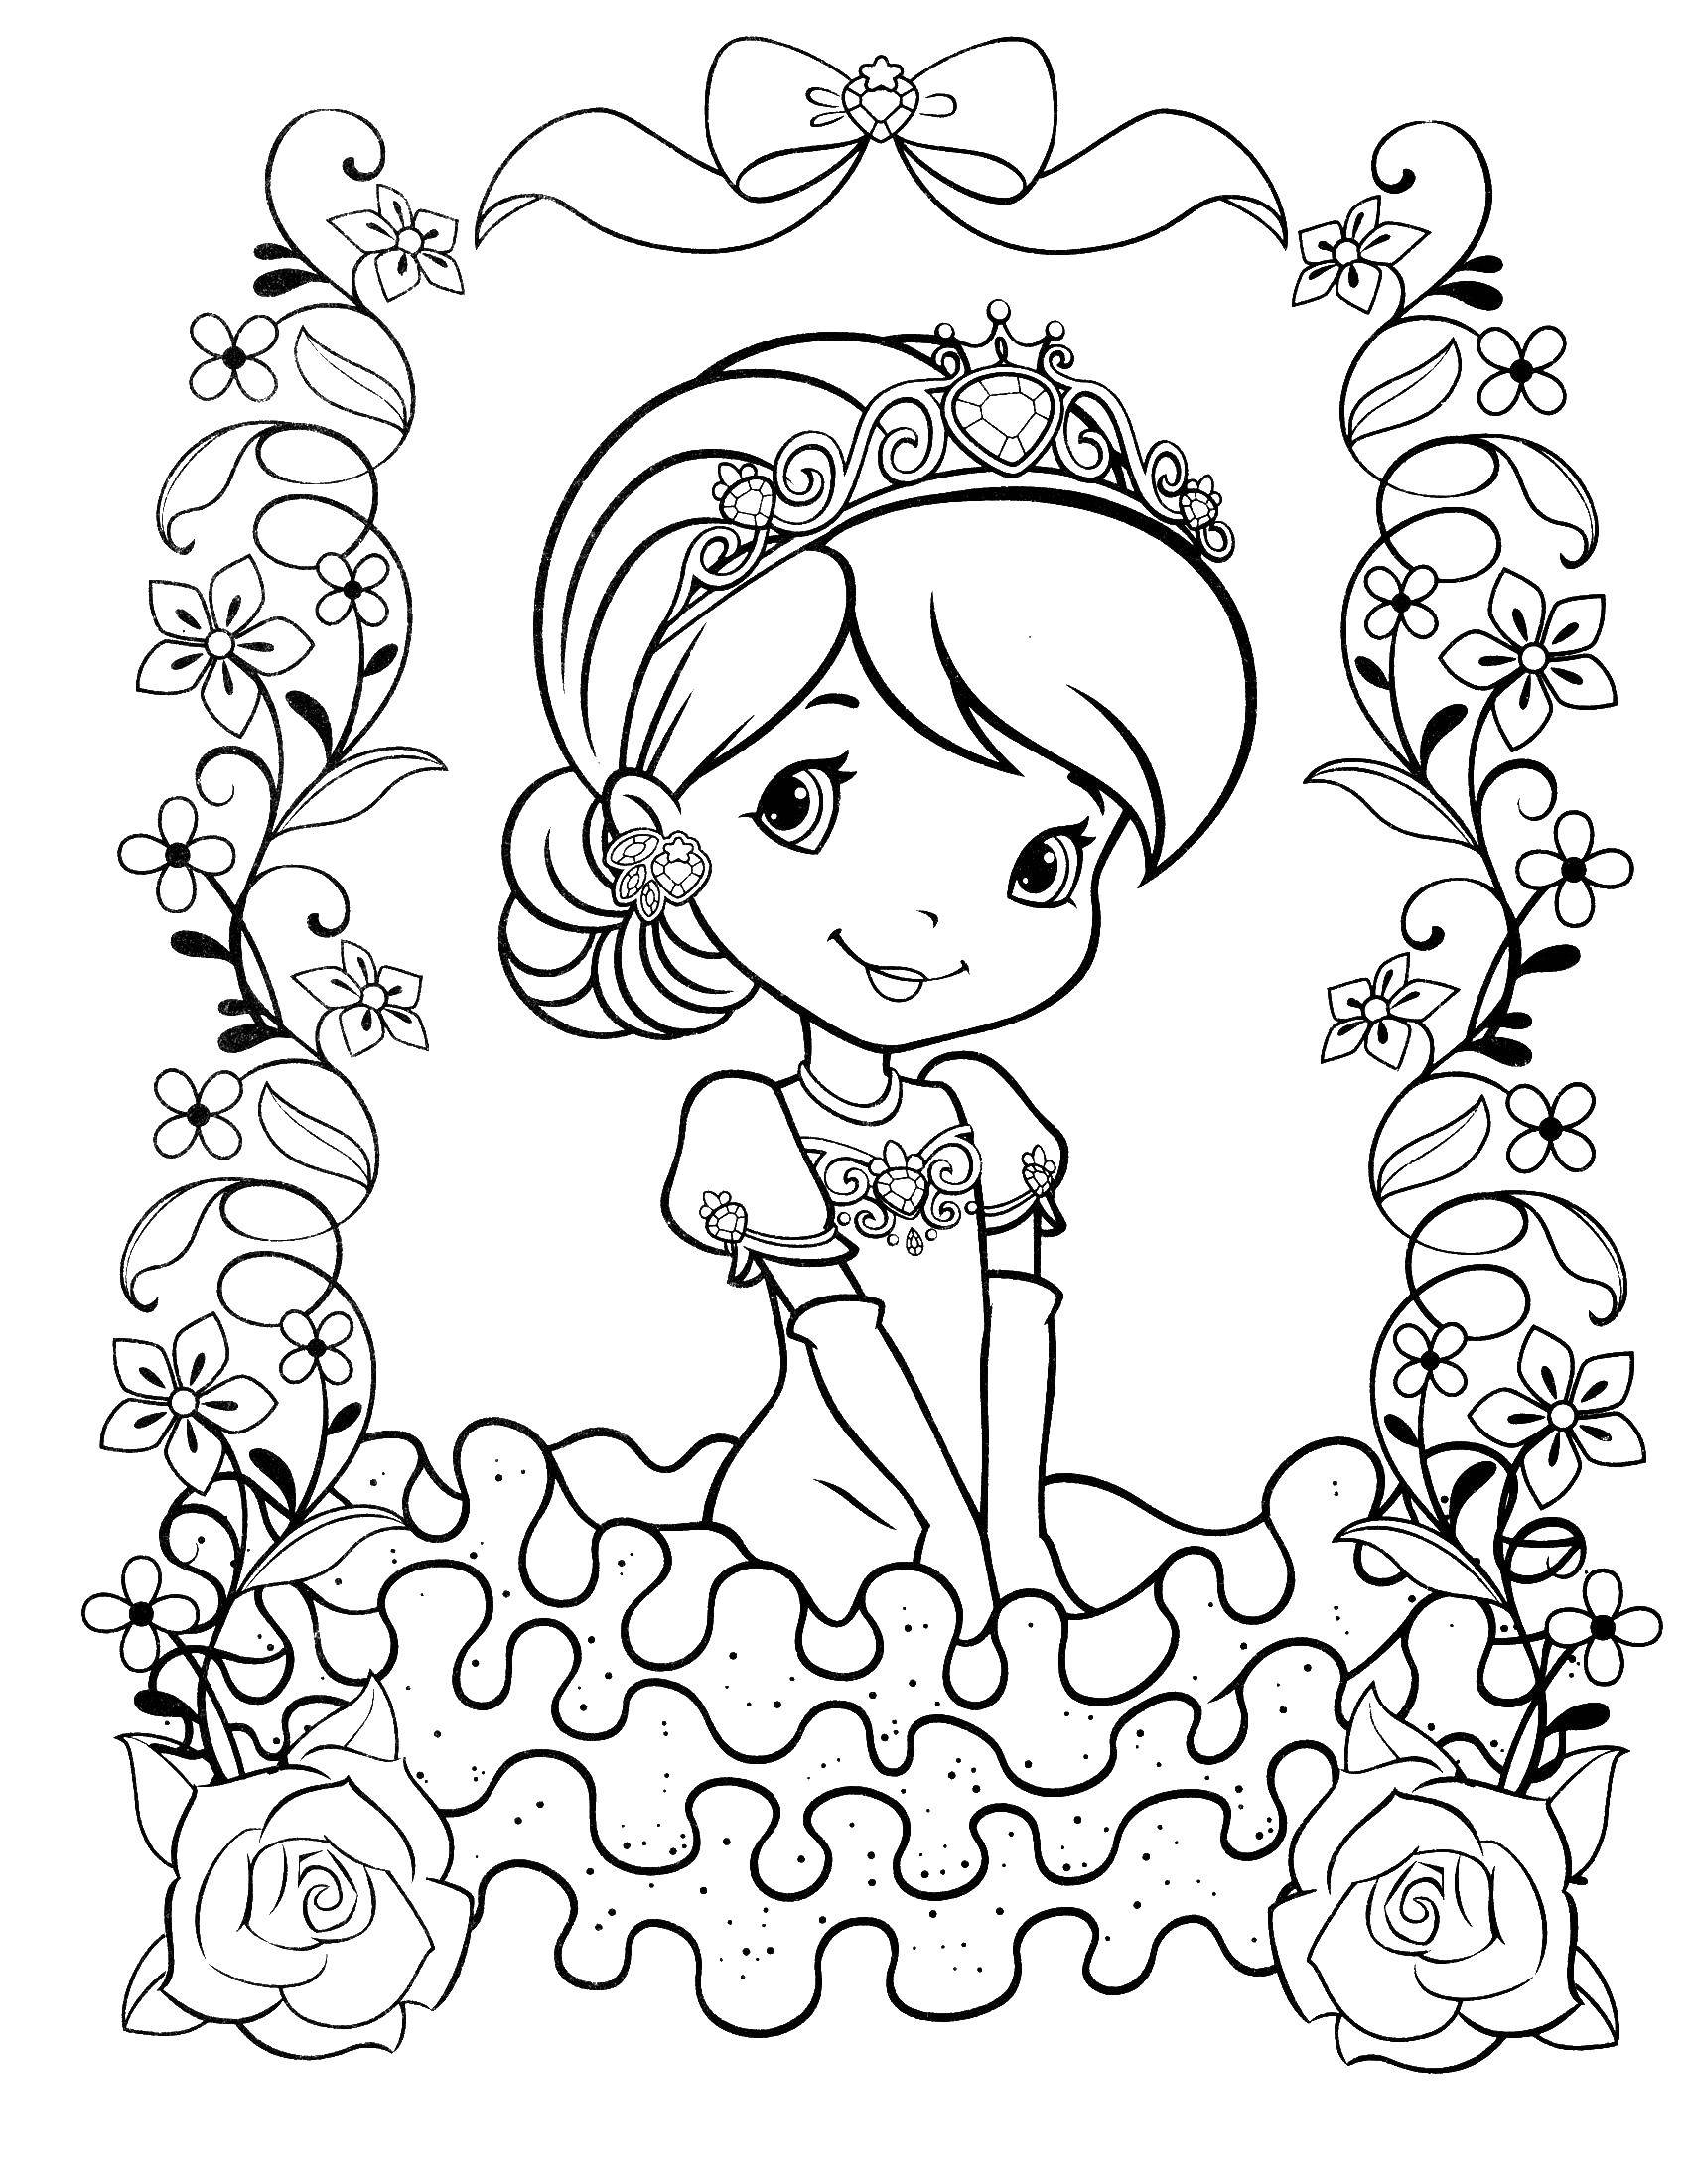 Coloring Little Princess. Category Princess. Tags:  princesses, flowers, patterns.